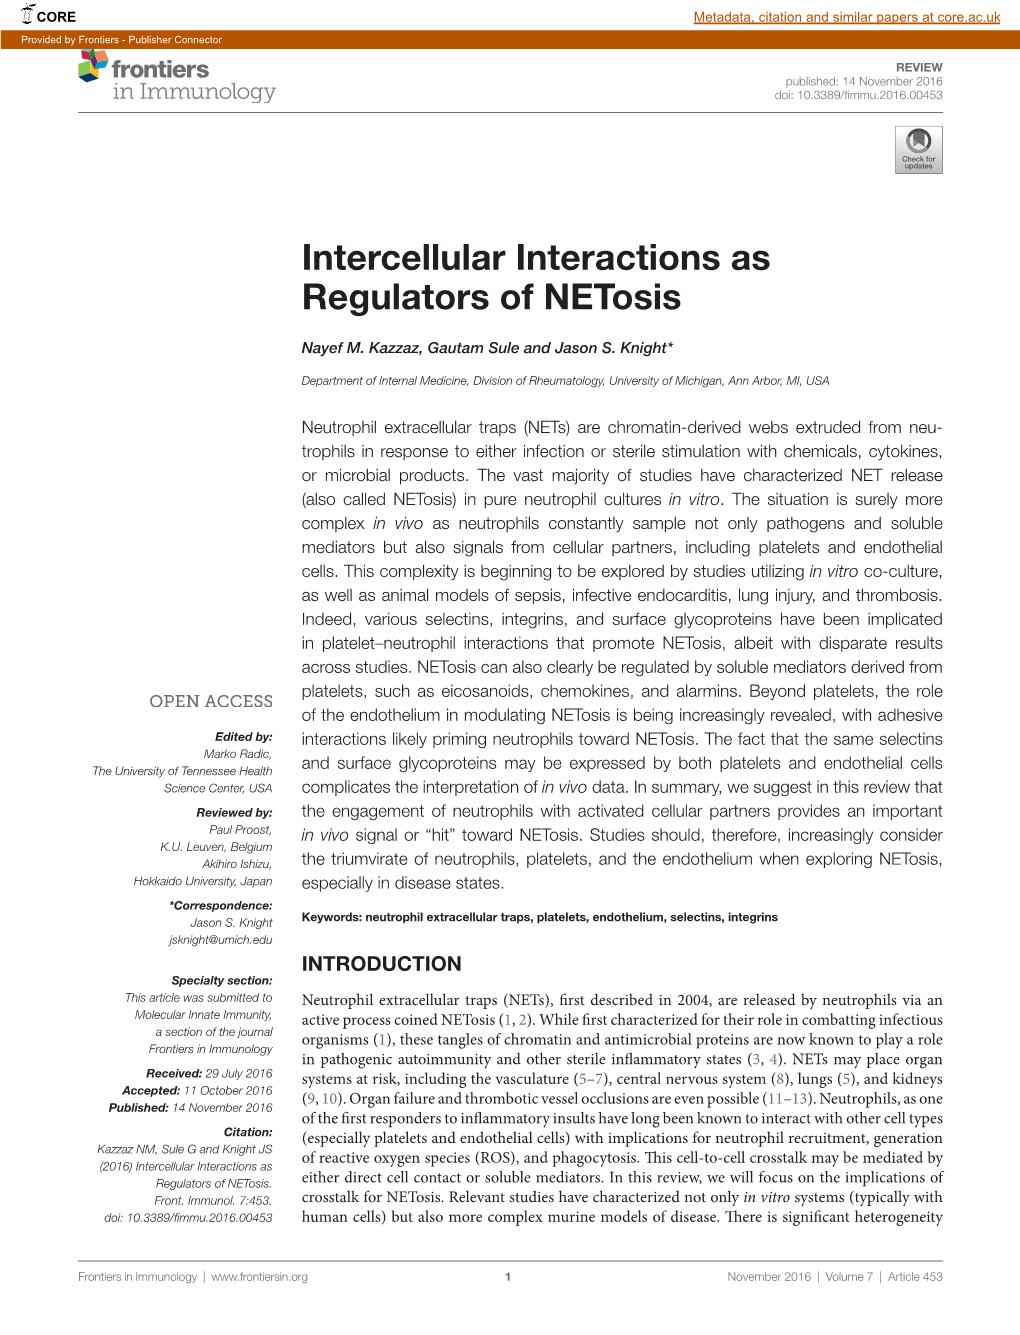 Intercellular Interactions As Regulators of Netosis